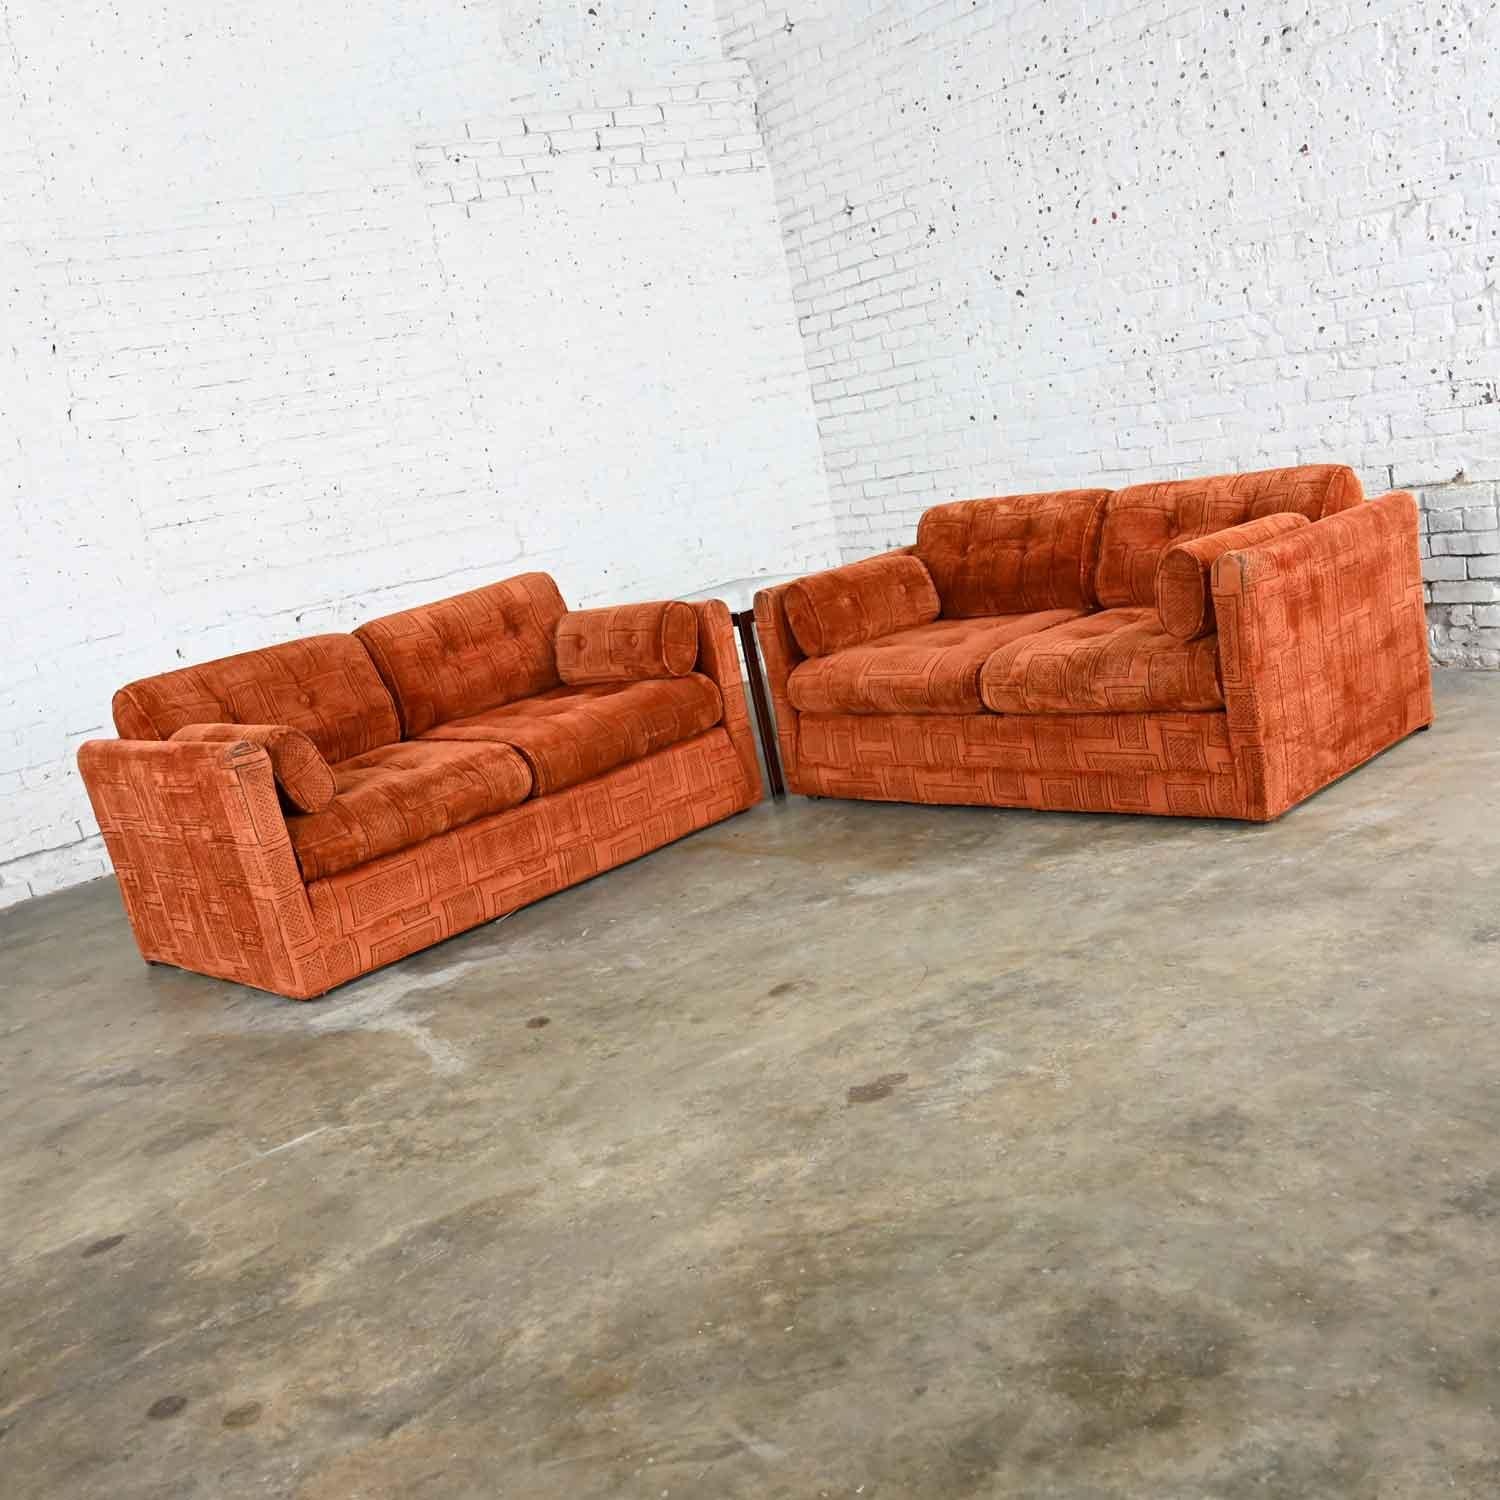 rust color furniture